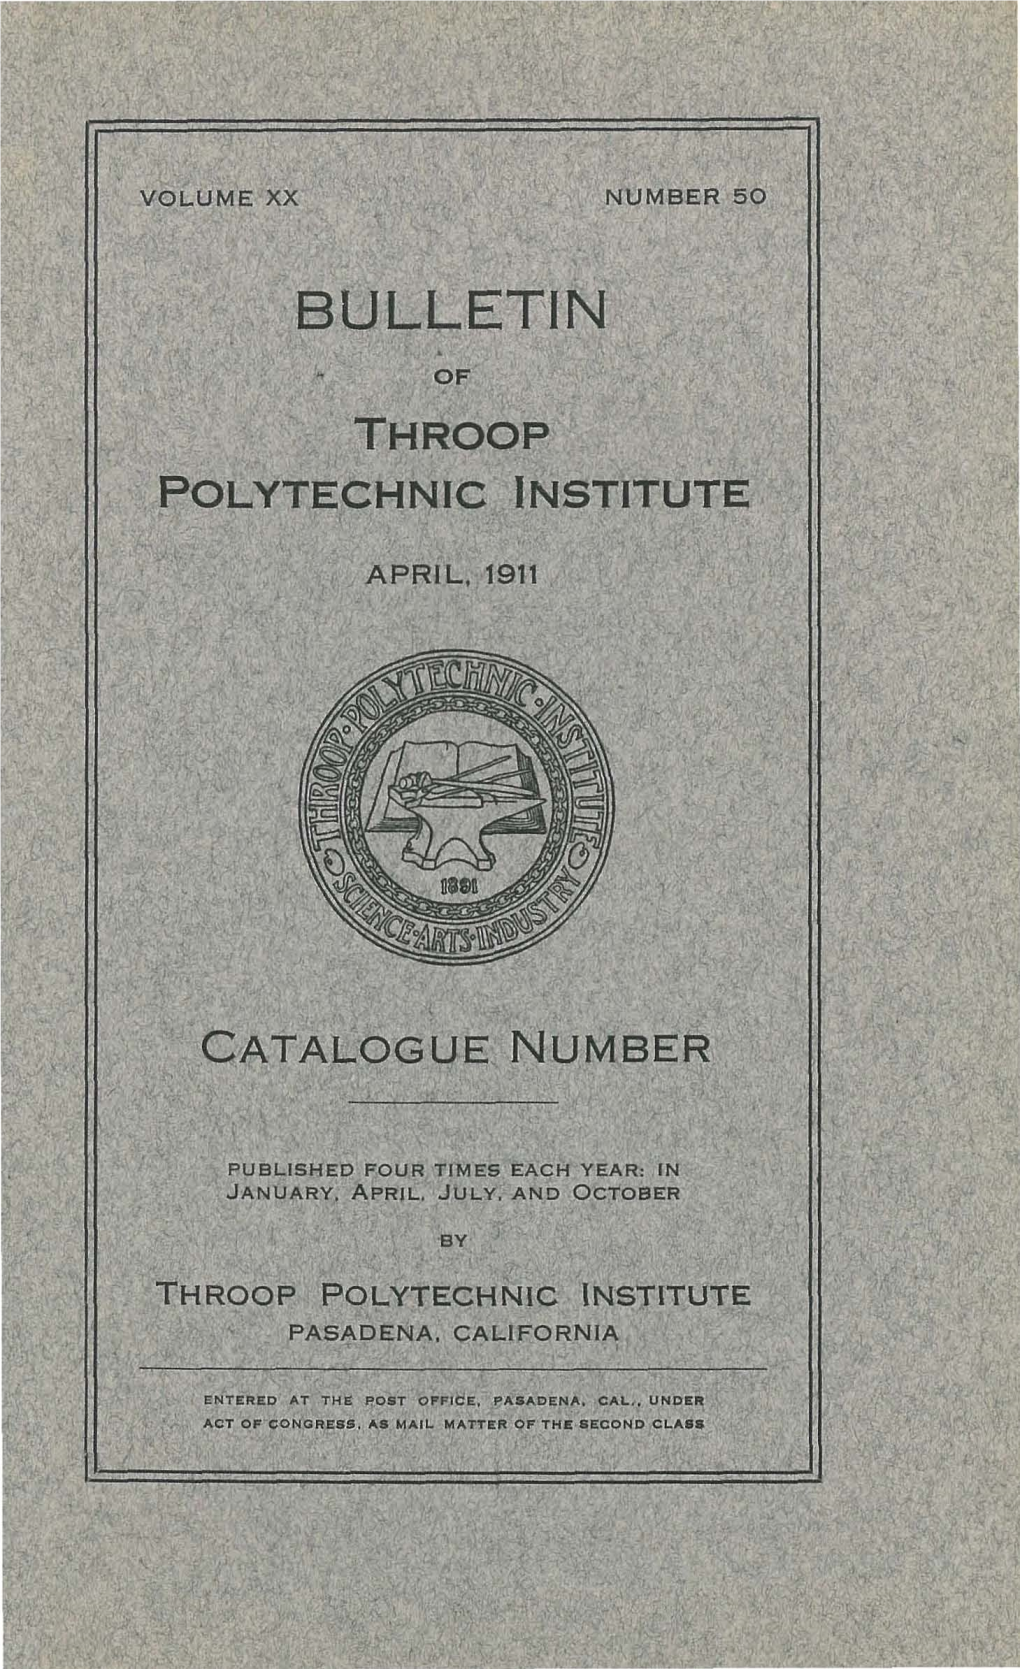 PDF (April 1911 Catalogue Number)